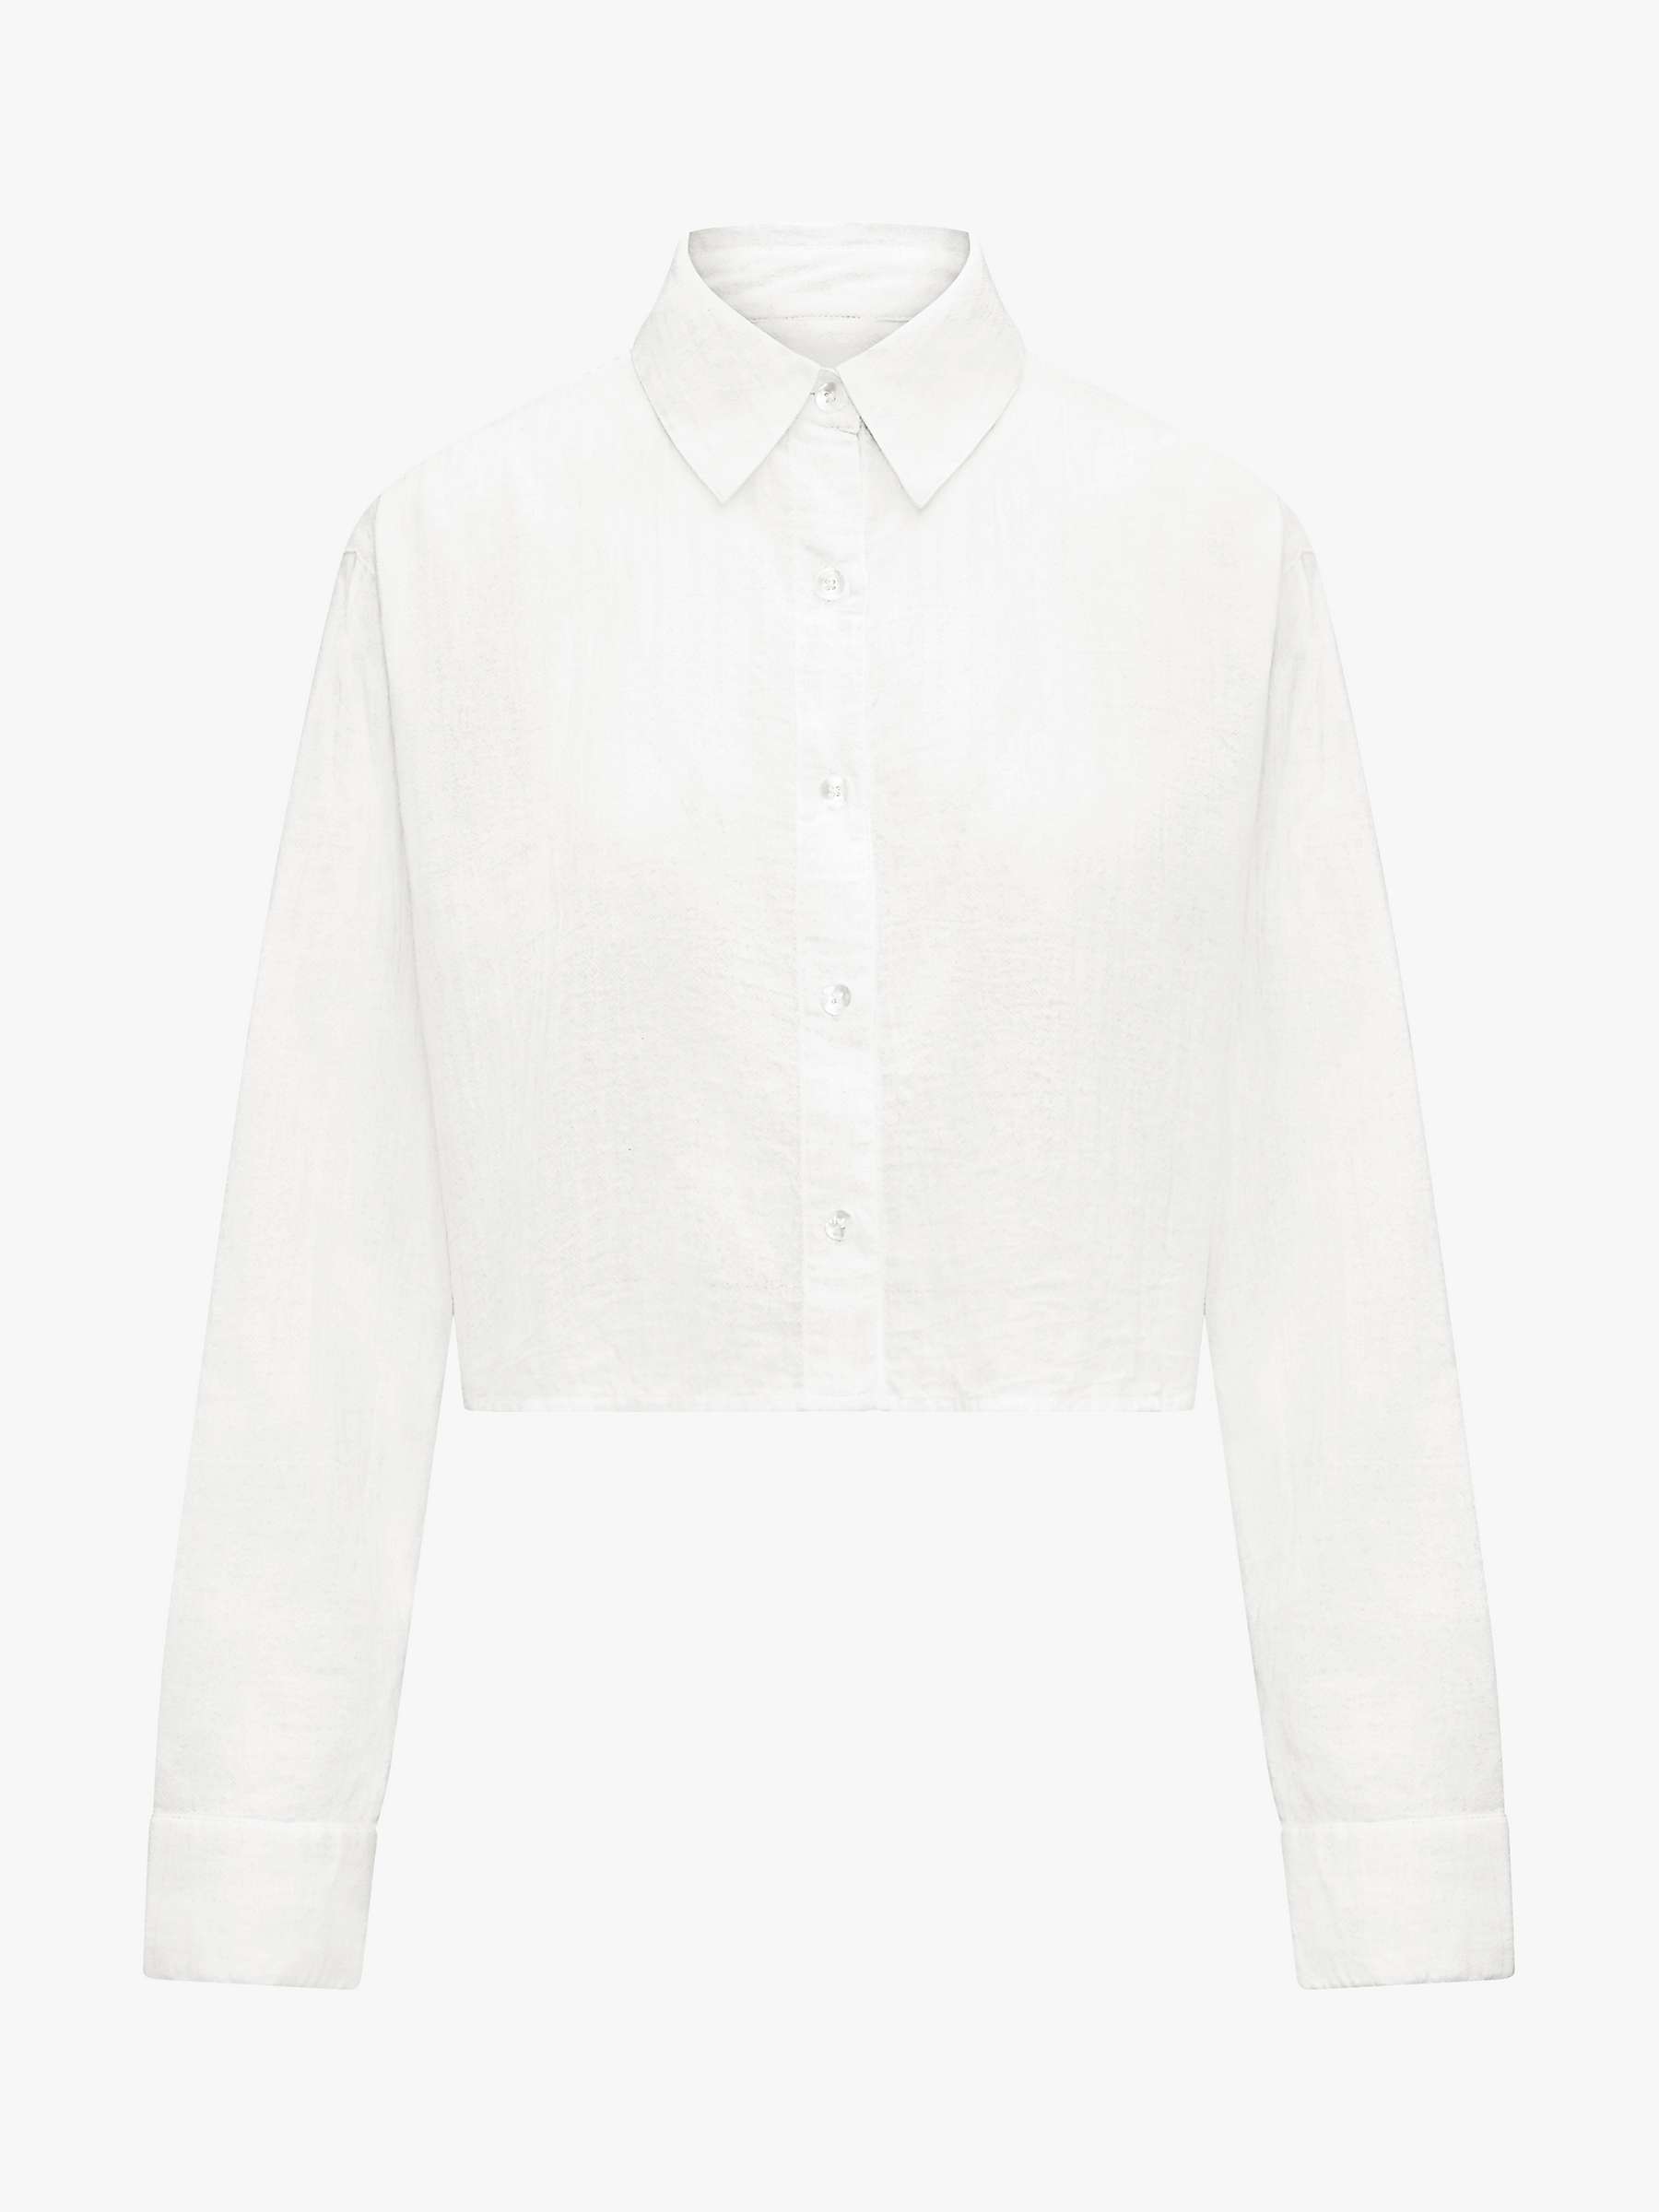 Buy Nudea Organic Cotton Cropped Night Shirt Online at johnlewis.com